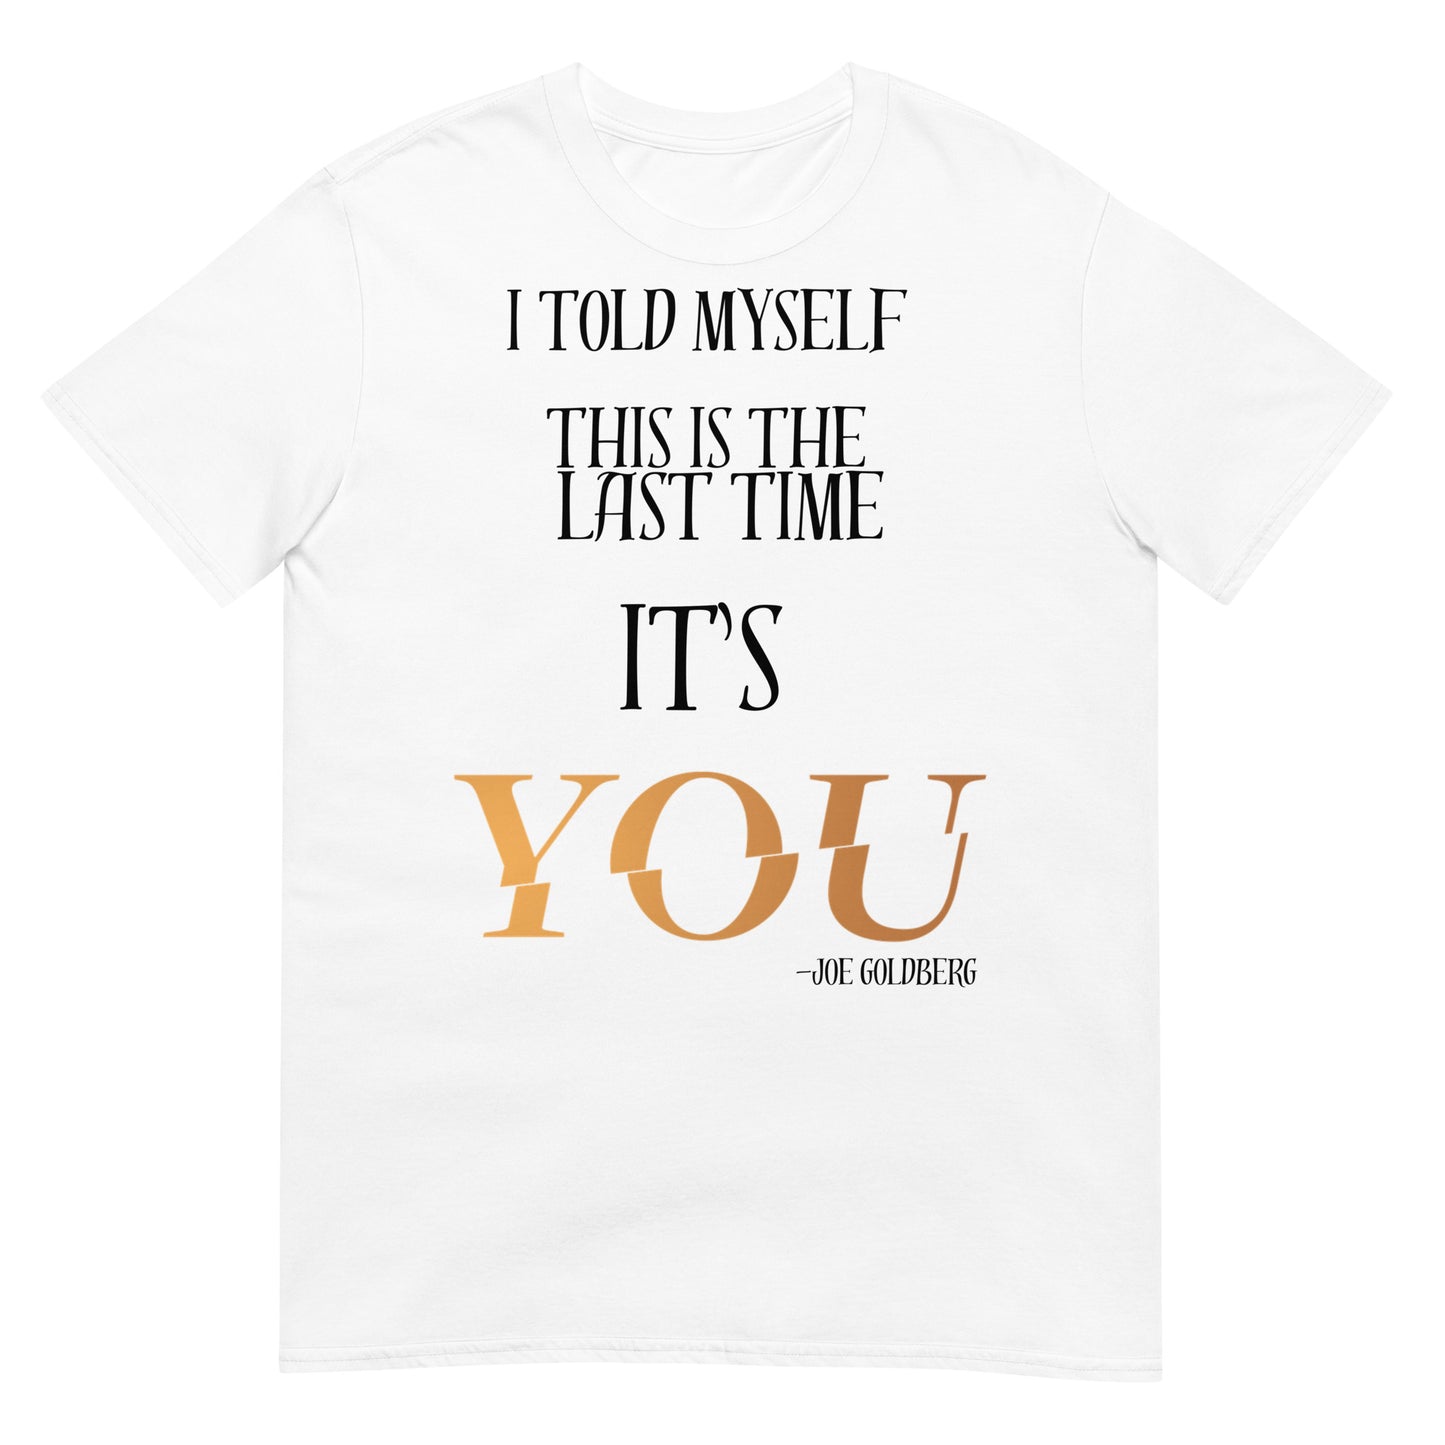 IT'S YOU - T-Shirt